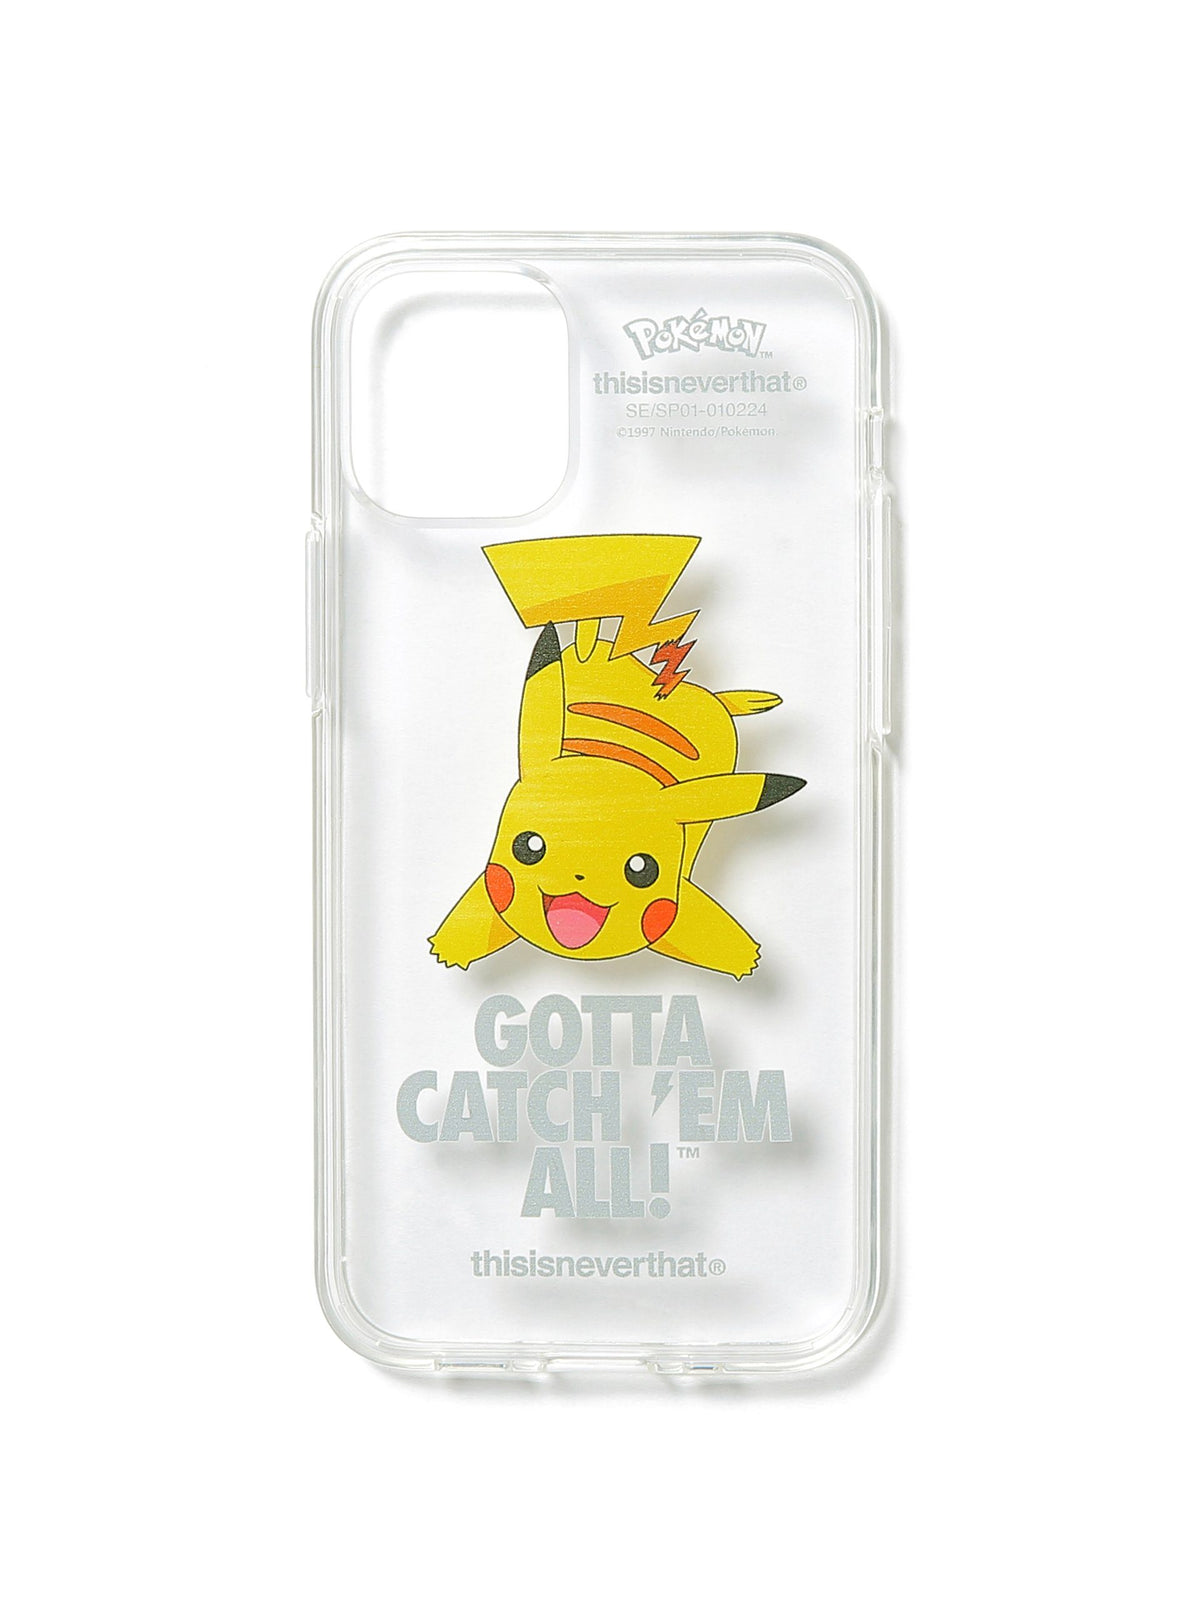 Pokemon Pikachu iPhone Case Accessory 